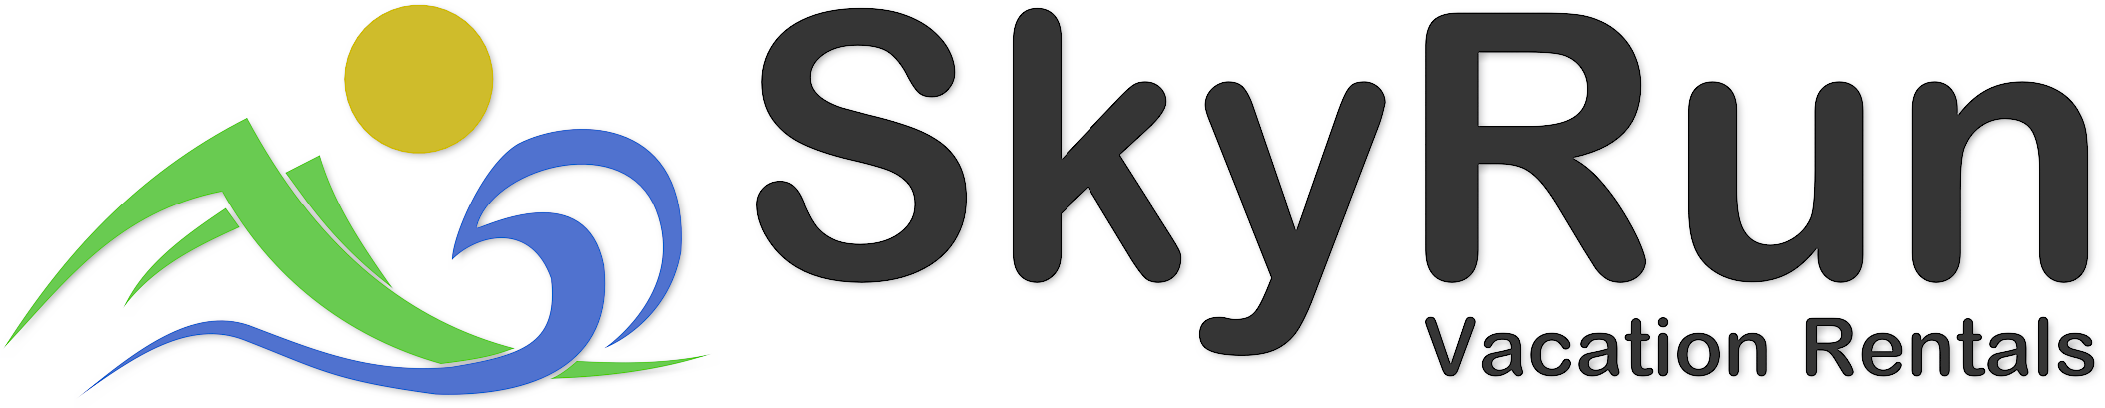 Keystone - SkyRun Vacation Rentals